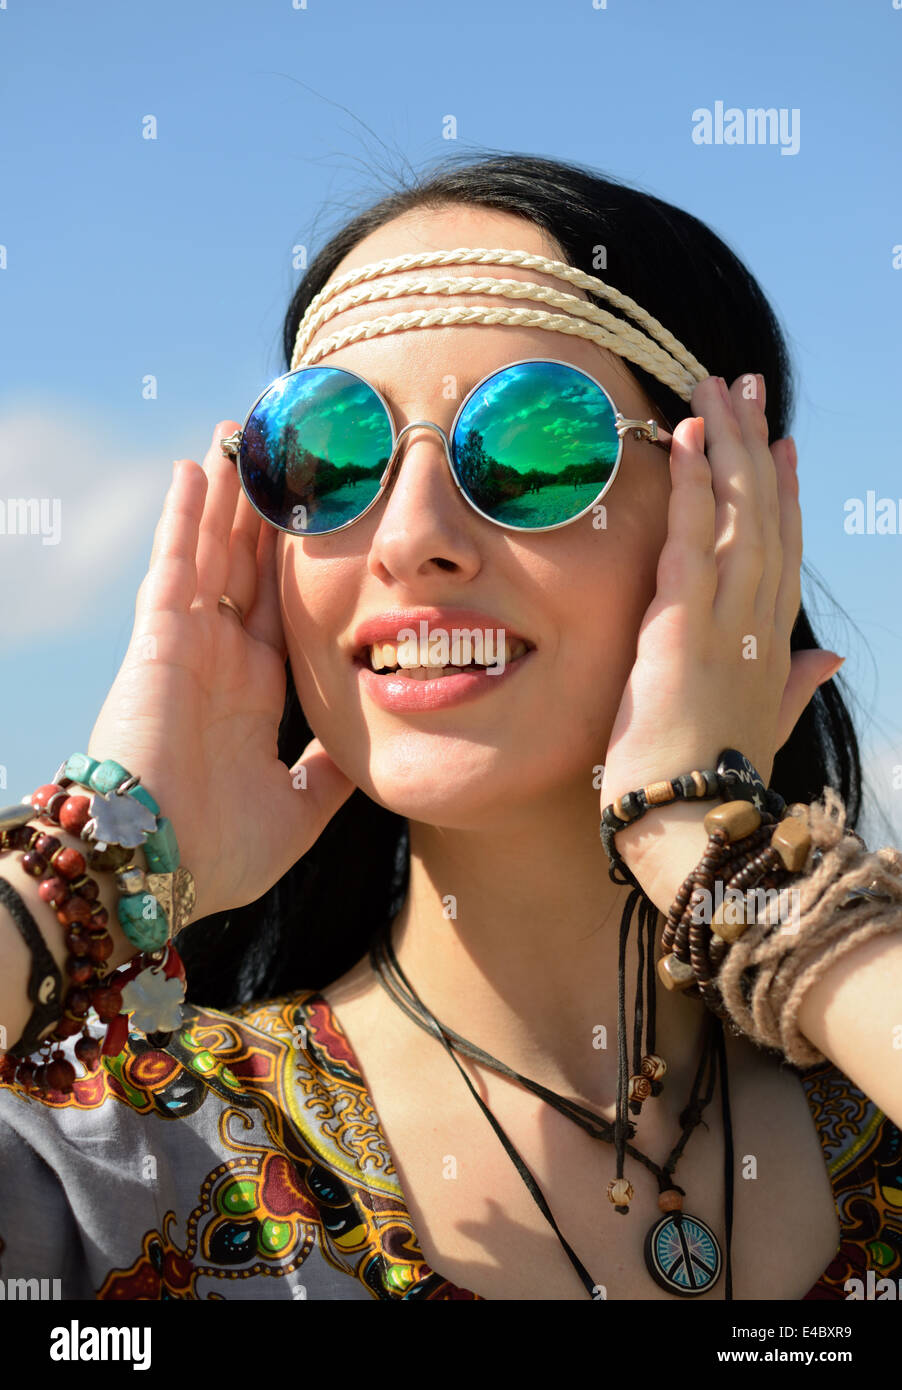 hippie girl in mirrored sunglasses Stock Photo